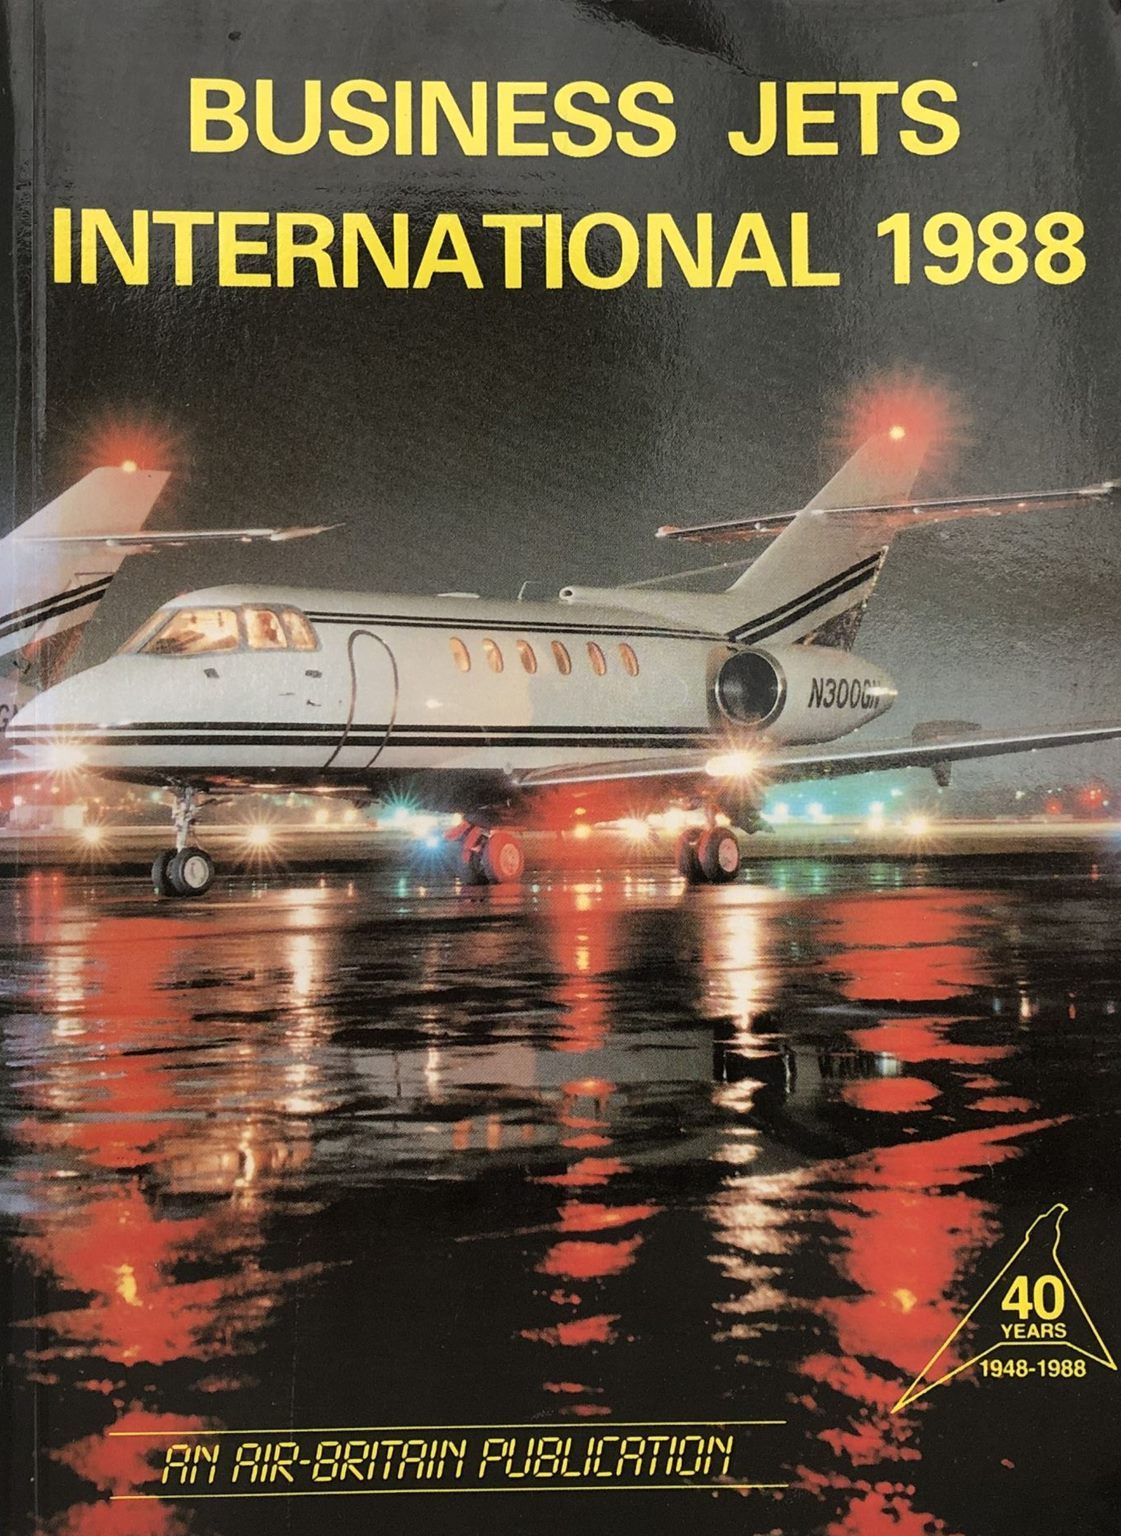 BUSINESS JETS INTERNATIONAL 1988